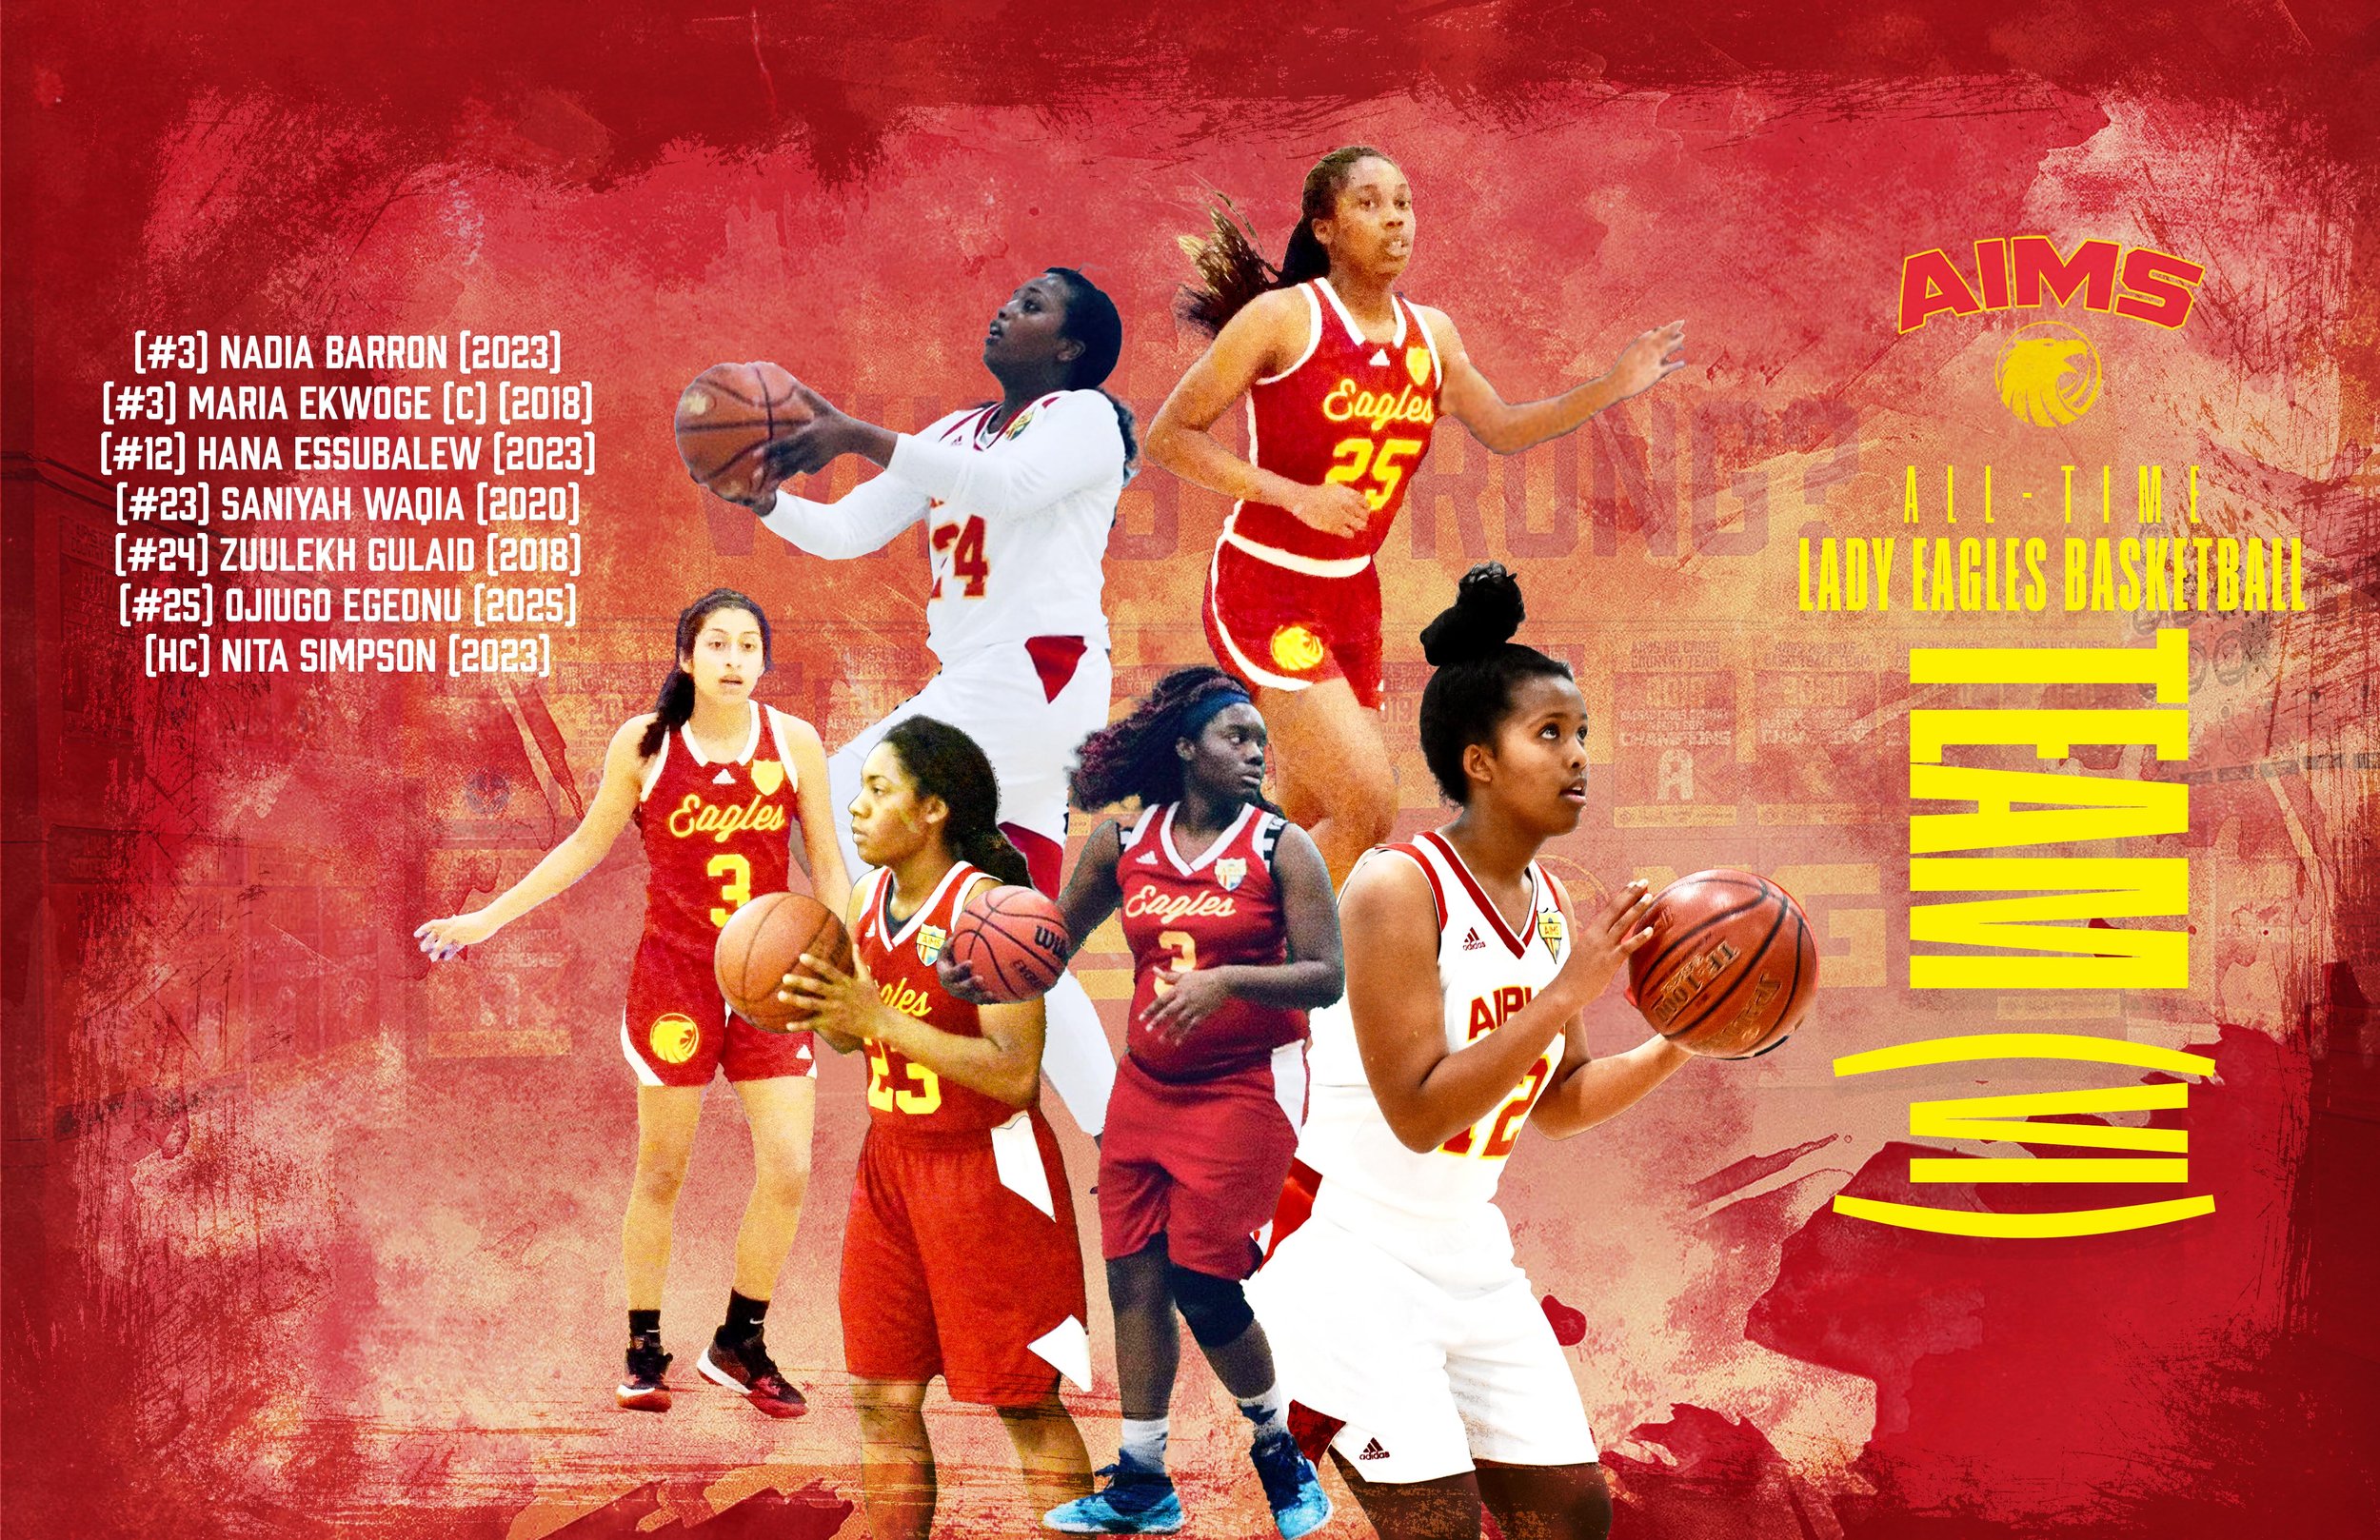   All-Time Lady Eagles Basketball Team:  (#3) Nadia Barron (2023), (#3) Maria Ekwoge (C) (2018), (#12) Hana Essubalew (2023), (#23) Saniyah Waqia (2020), (#24) Zuulekh Gulaid (2018), (#25) Ojiugo Egeonu (2025), (HC) Nita Simpson (2023)  